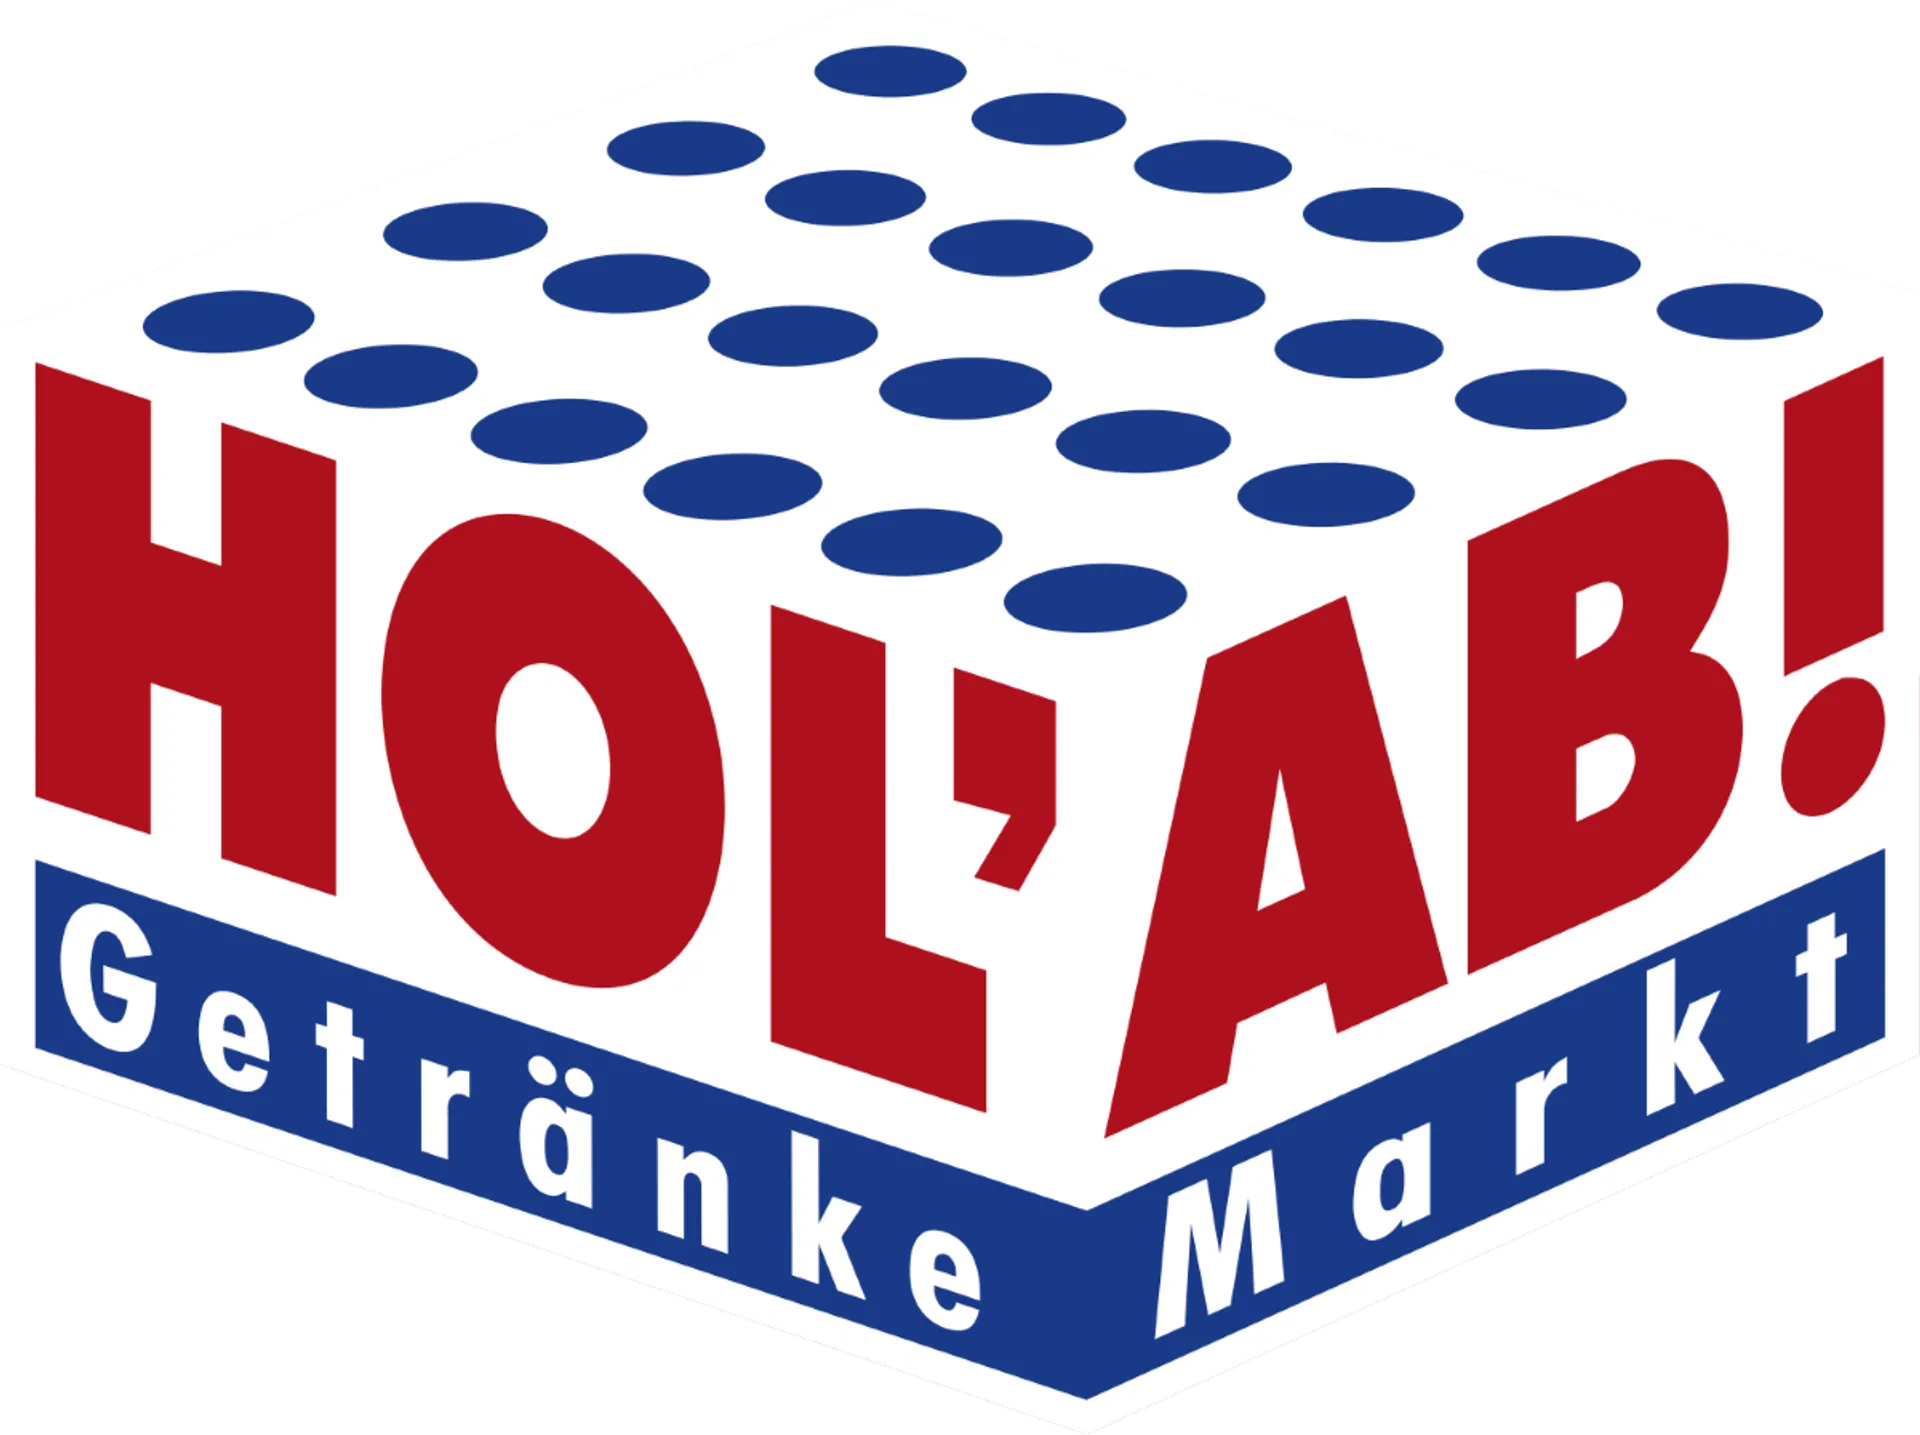 HOL'AB! GETRÄNKEMARKT logo